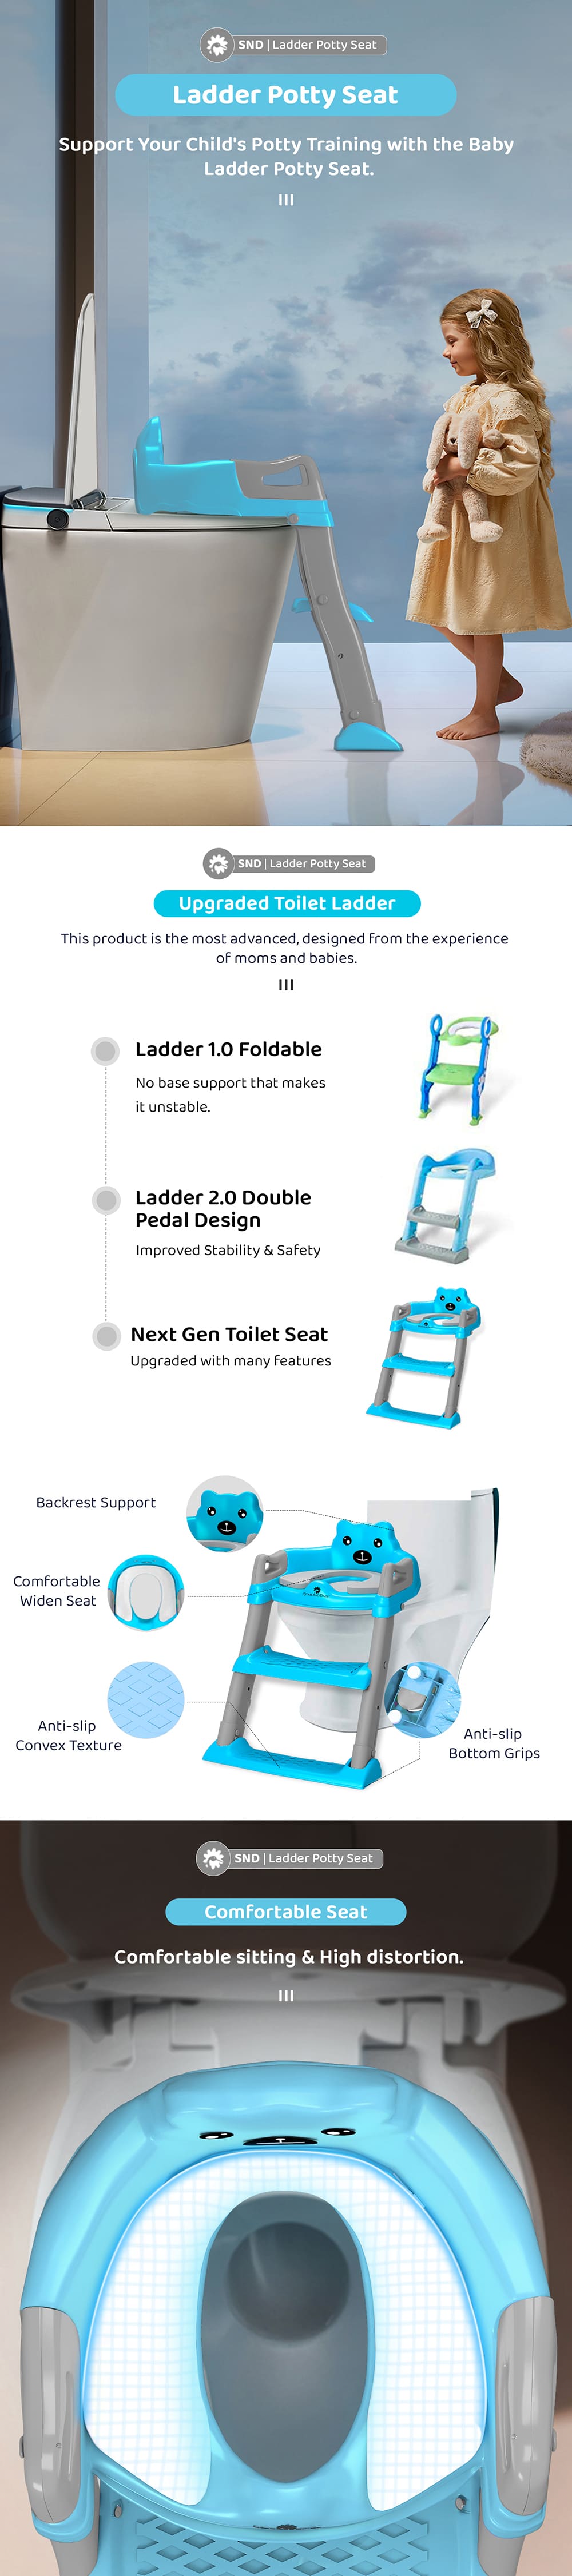 Upgraded Toilet Ladder for Kids